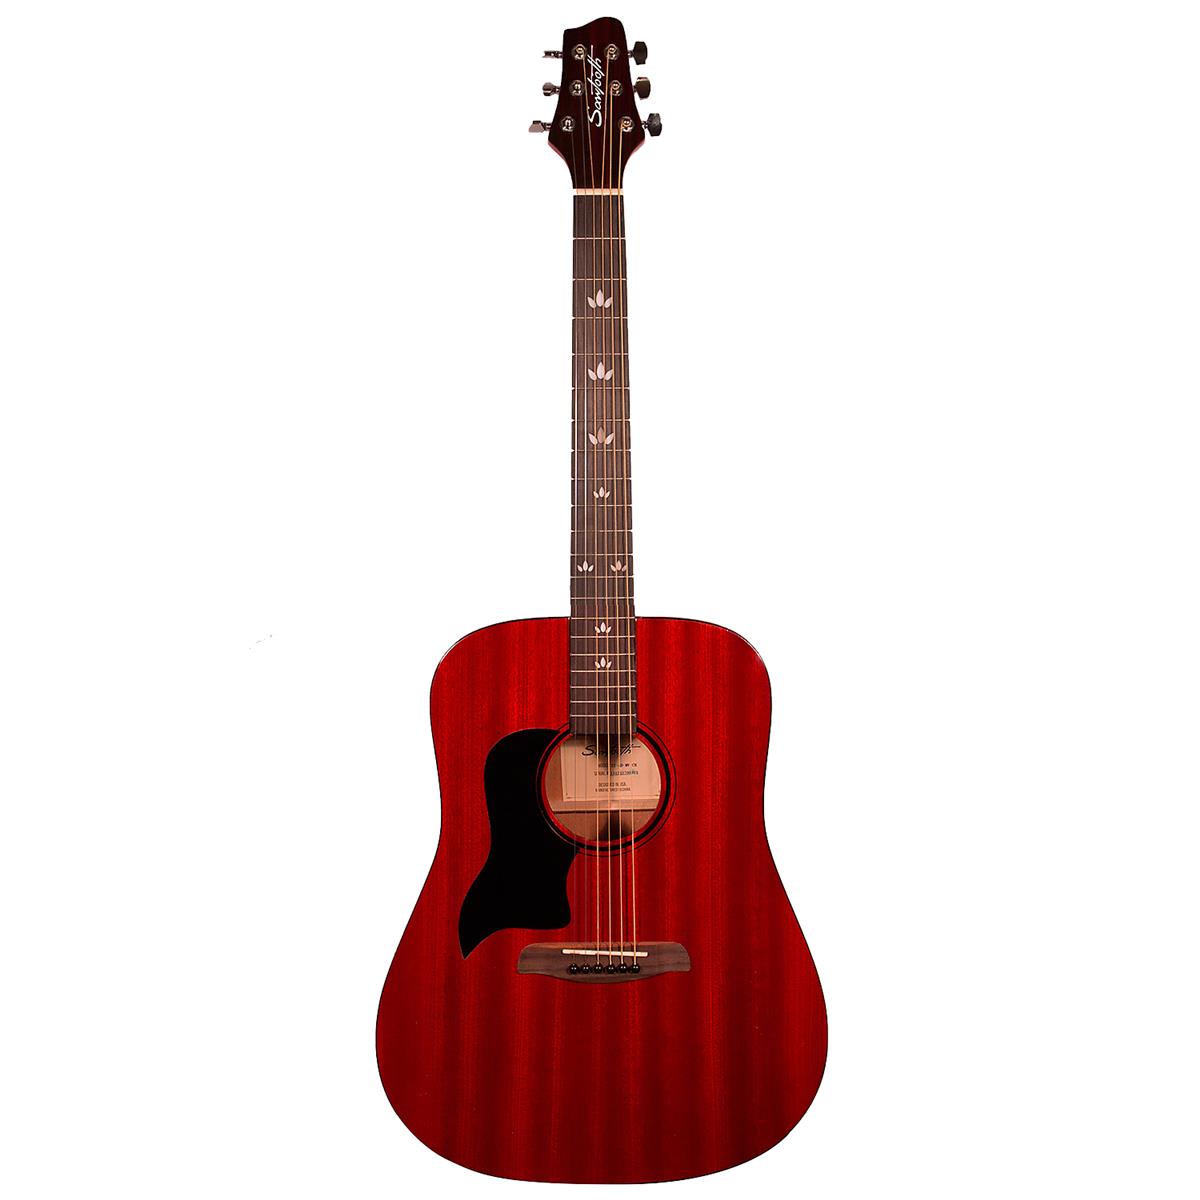 Sawtooth Modern Vintage Left-Handed Acoustic Guitar, Transparent Cherry Mahogany -  ST-LH-AD-MV-CH